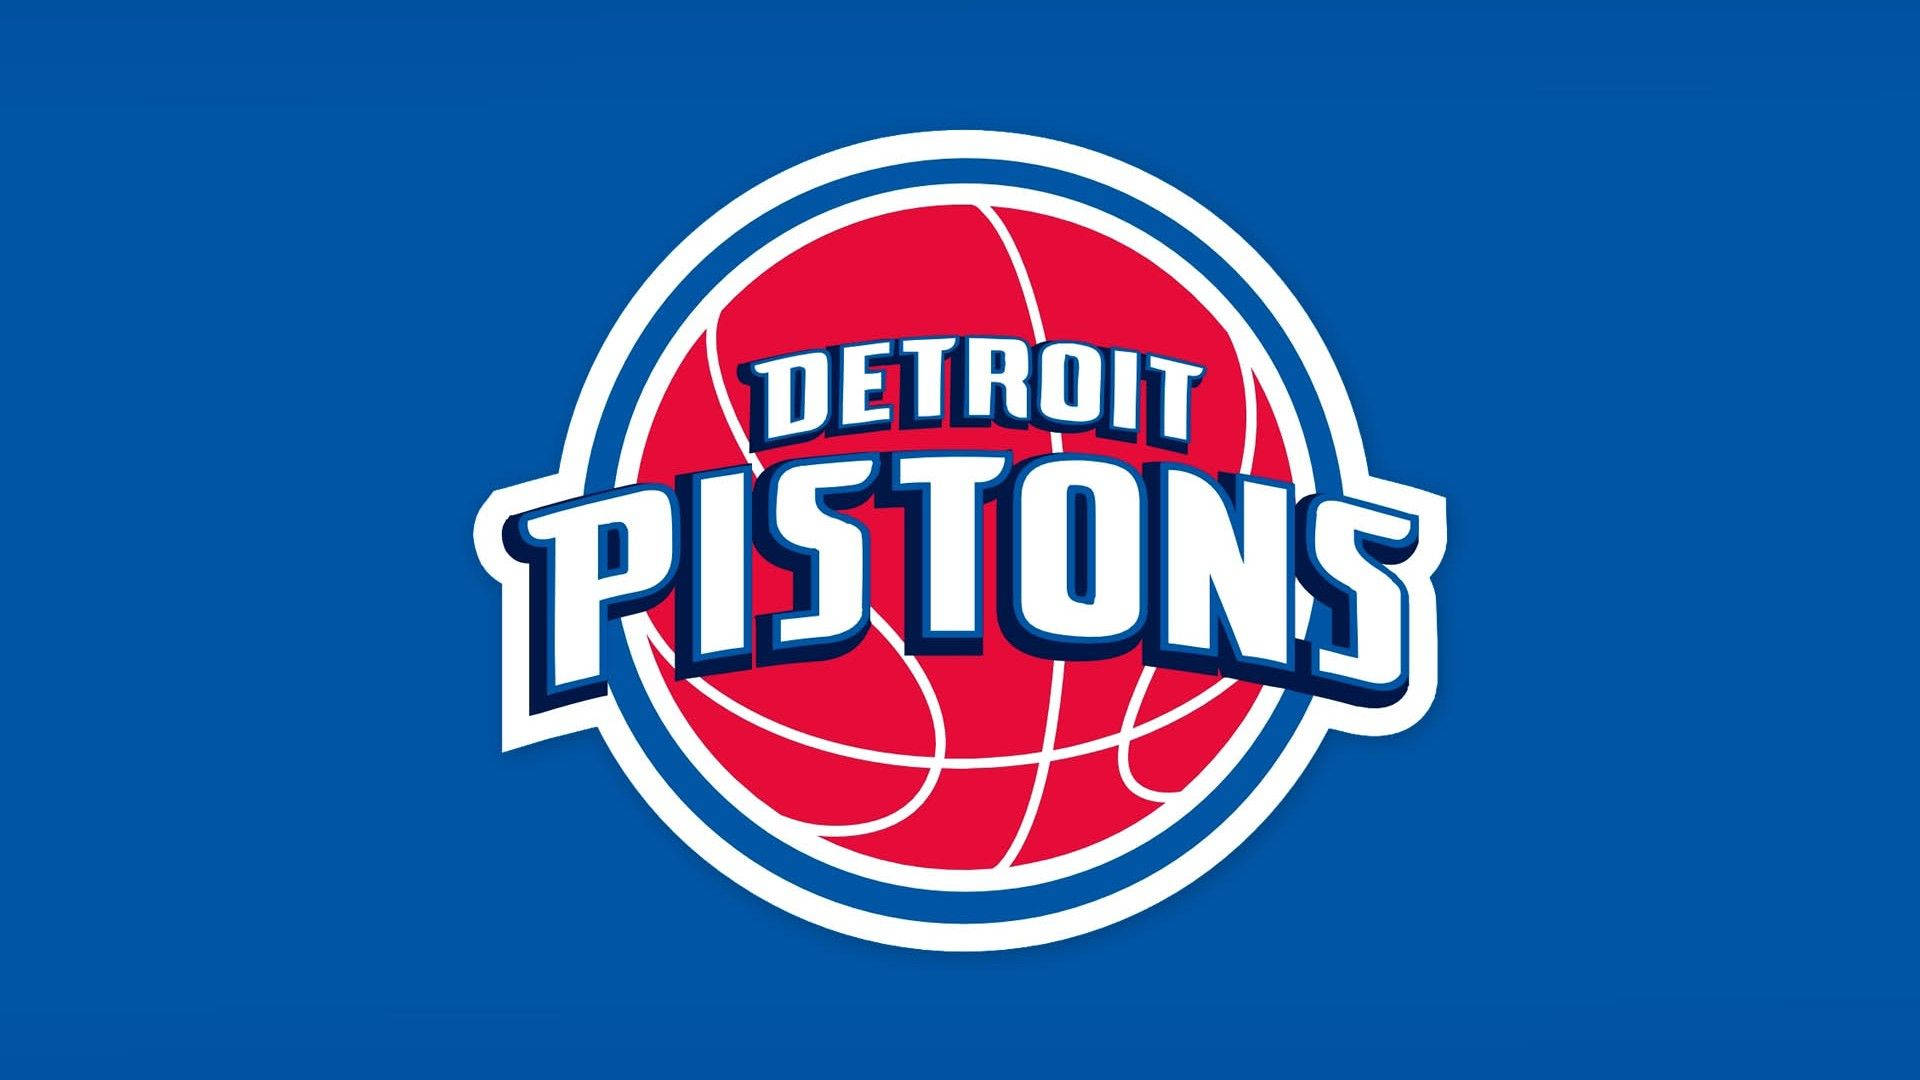 Detroit Pistons Vintage Team Logo Wallpaper